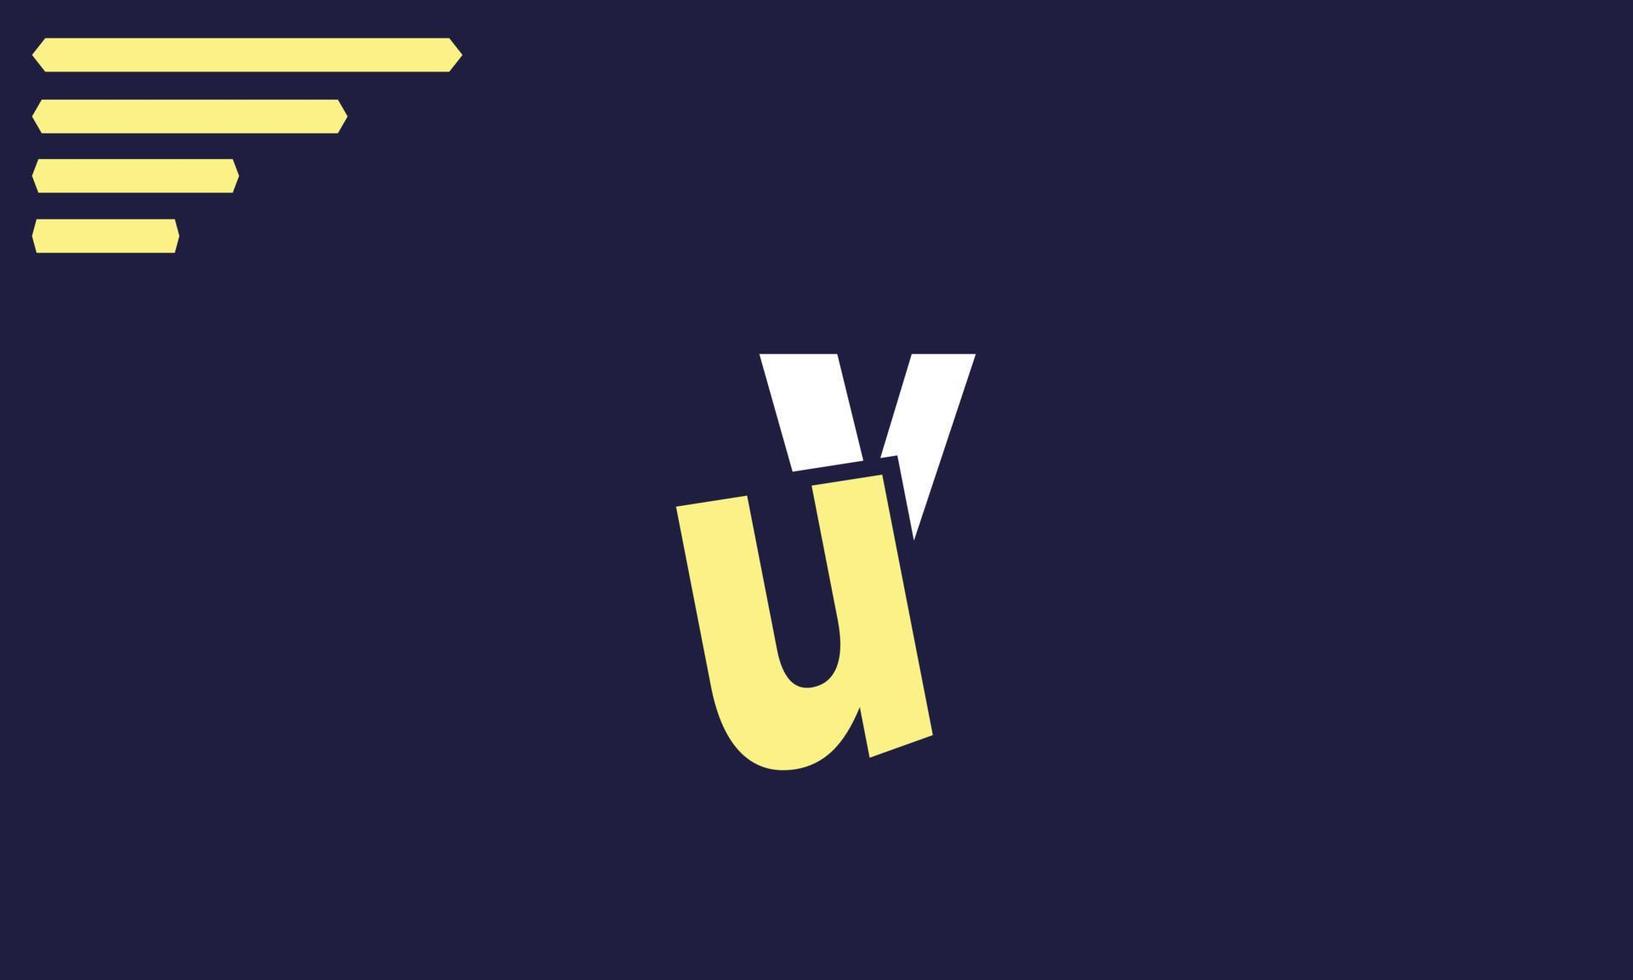 Alphabet letters Initials Monogram logo UY, YU, U and Y vector